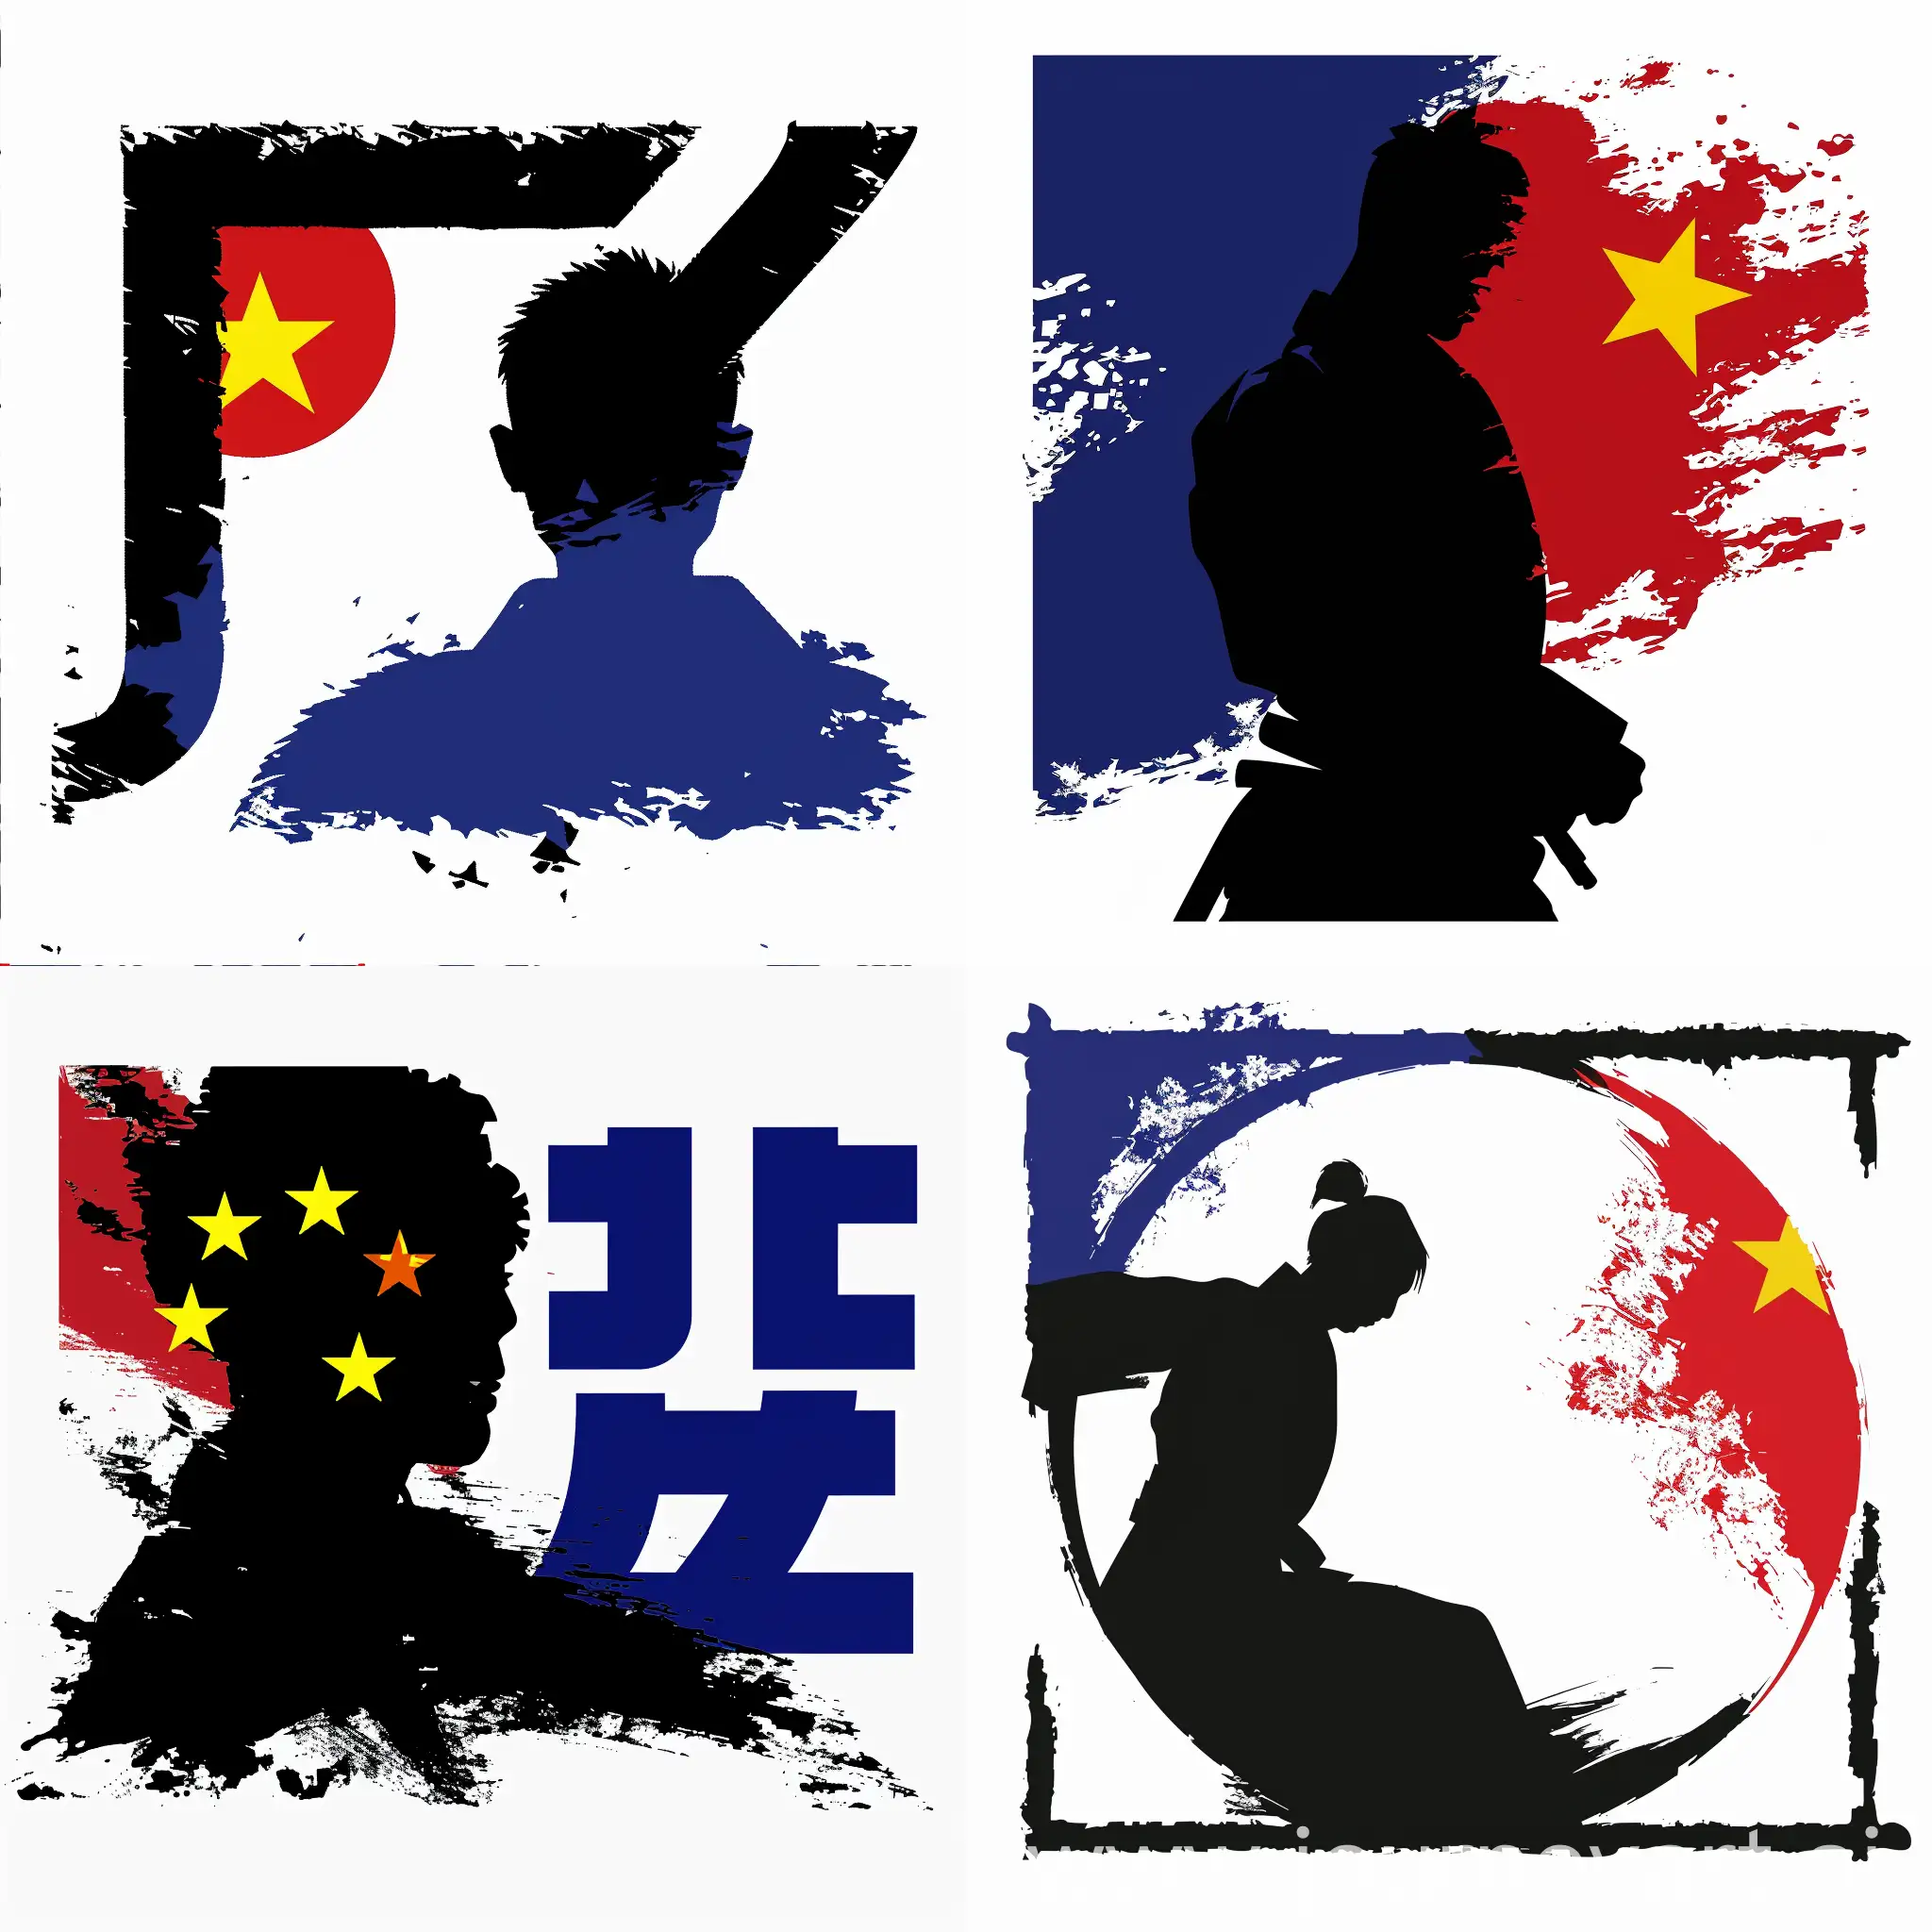 логотип черно-белый Judo sref https://www.48hourslogo.com/48hourslogo_data/2019/07/09/2019070906454465427.png